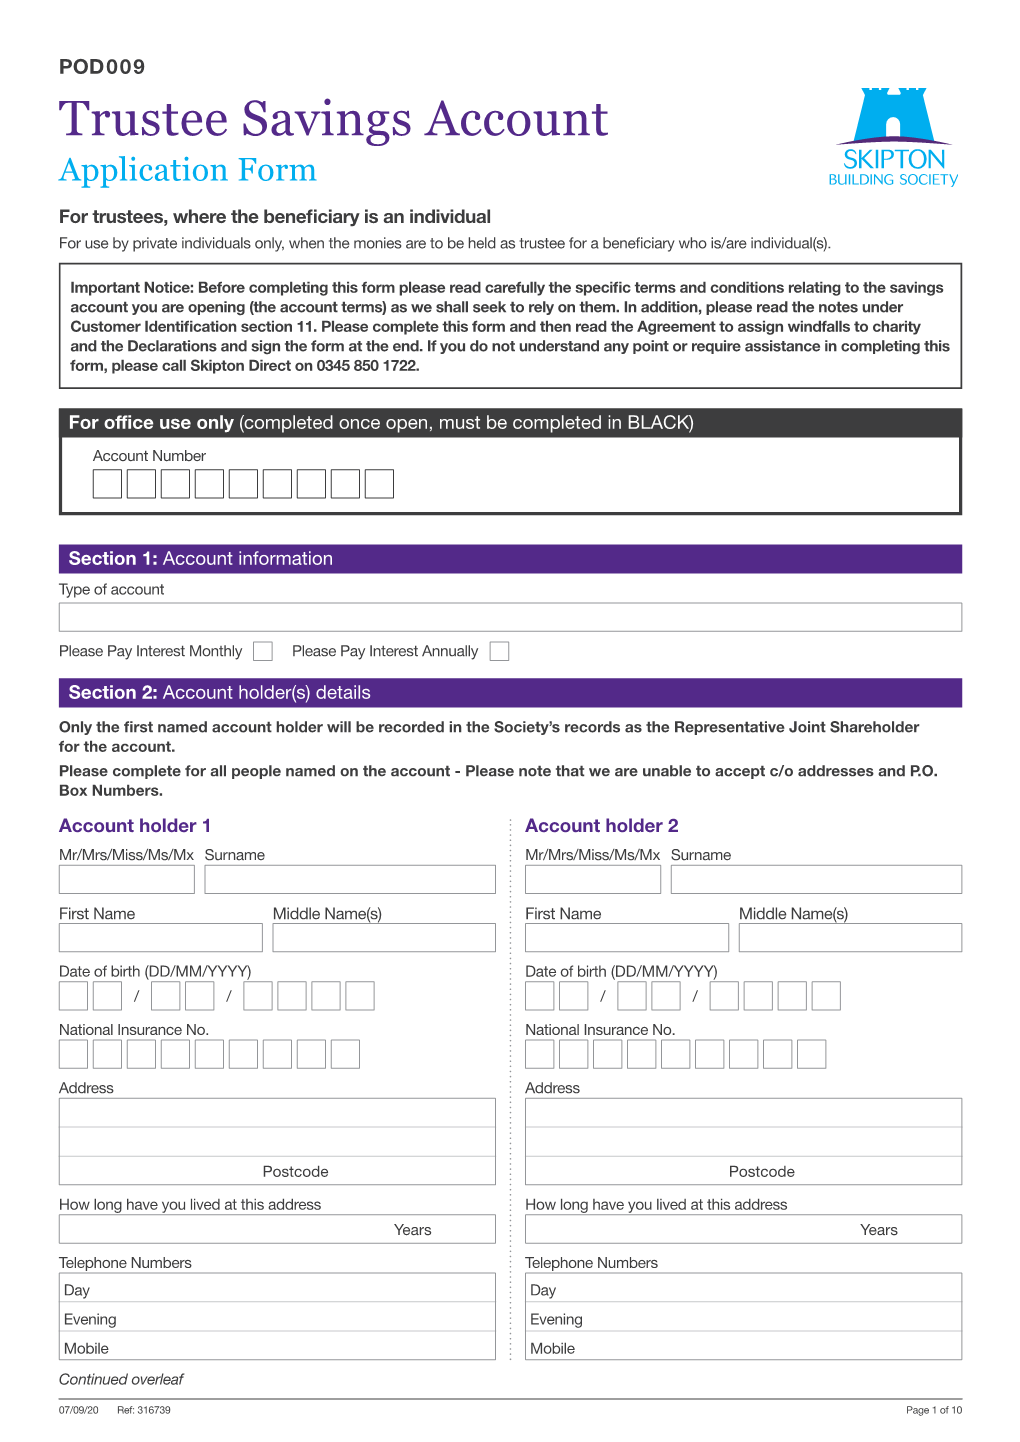 Trustee Savings Account Application Form